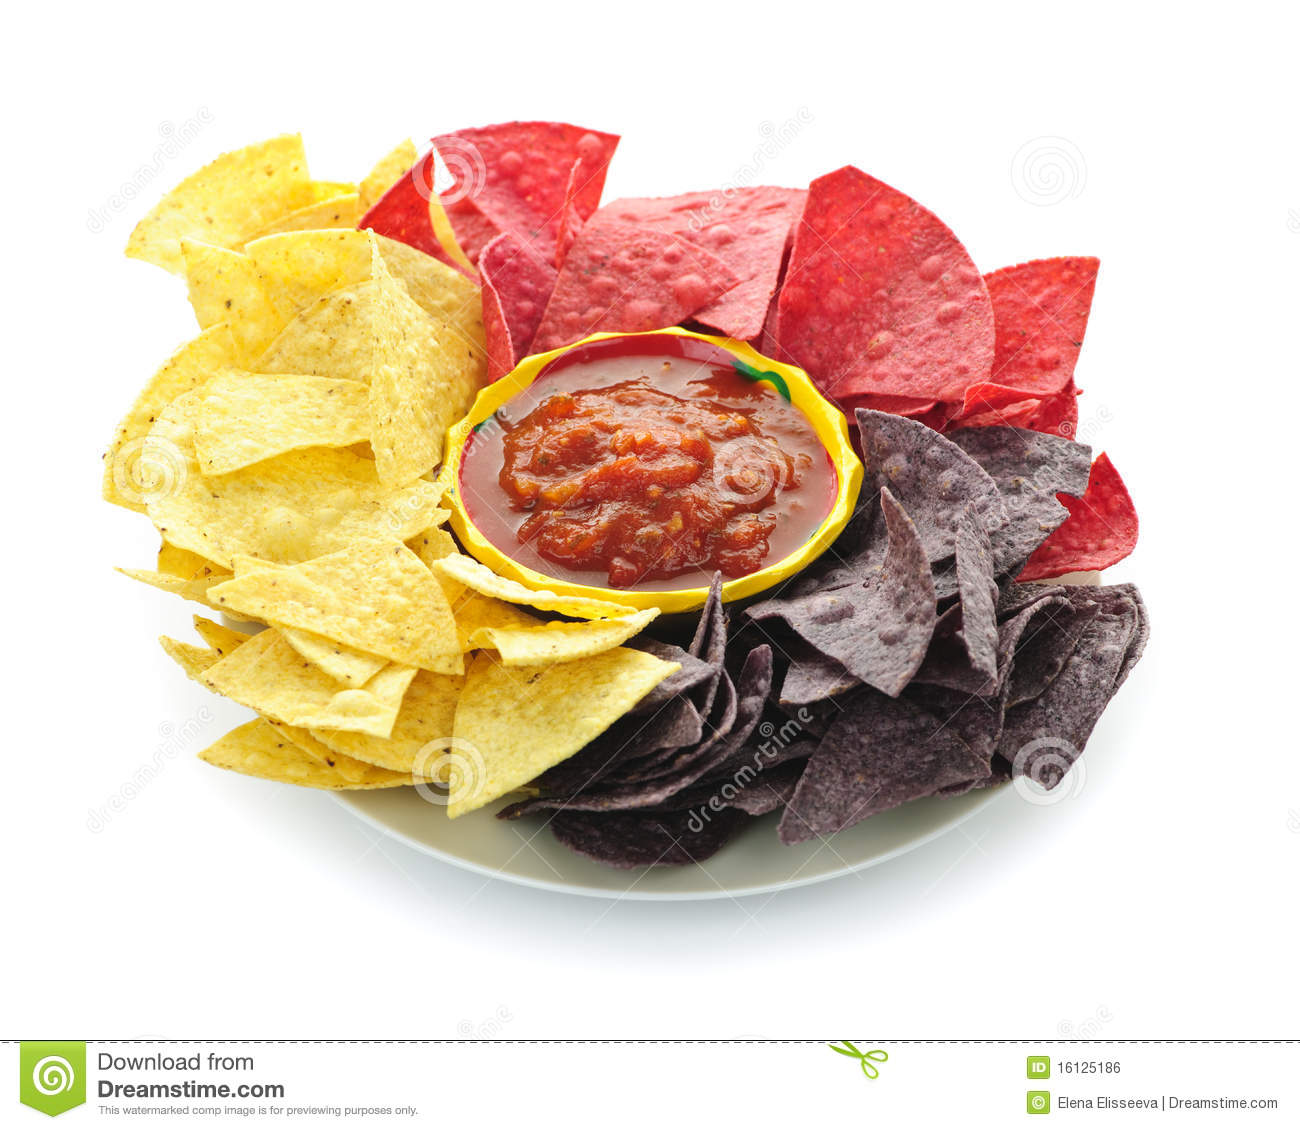 Tortilla Chips And Salsa Royalty Free Stock Image   Image  16125186